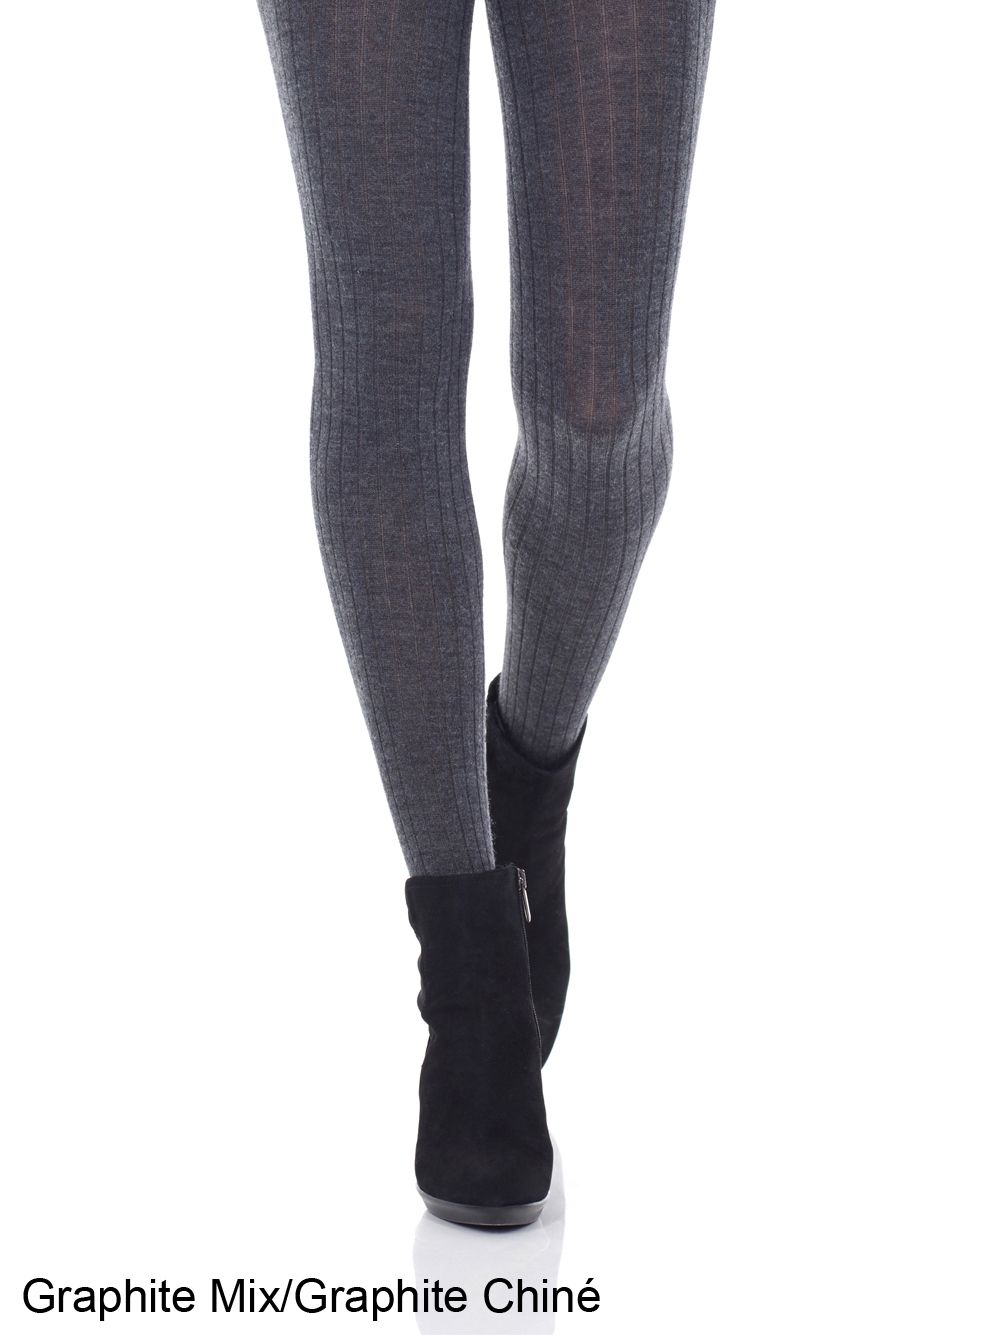 Solid merino tights, Mondor, Shop Women's Tights Online